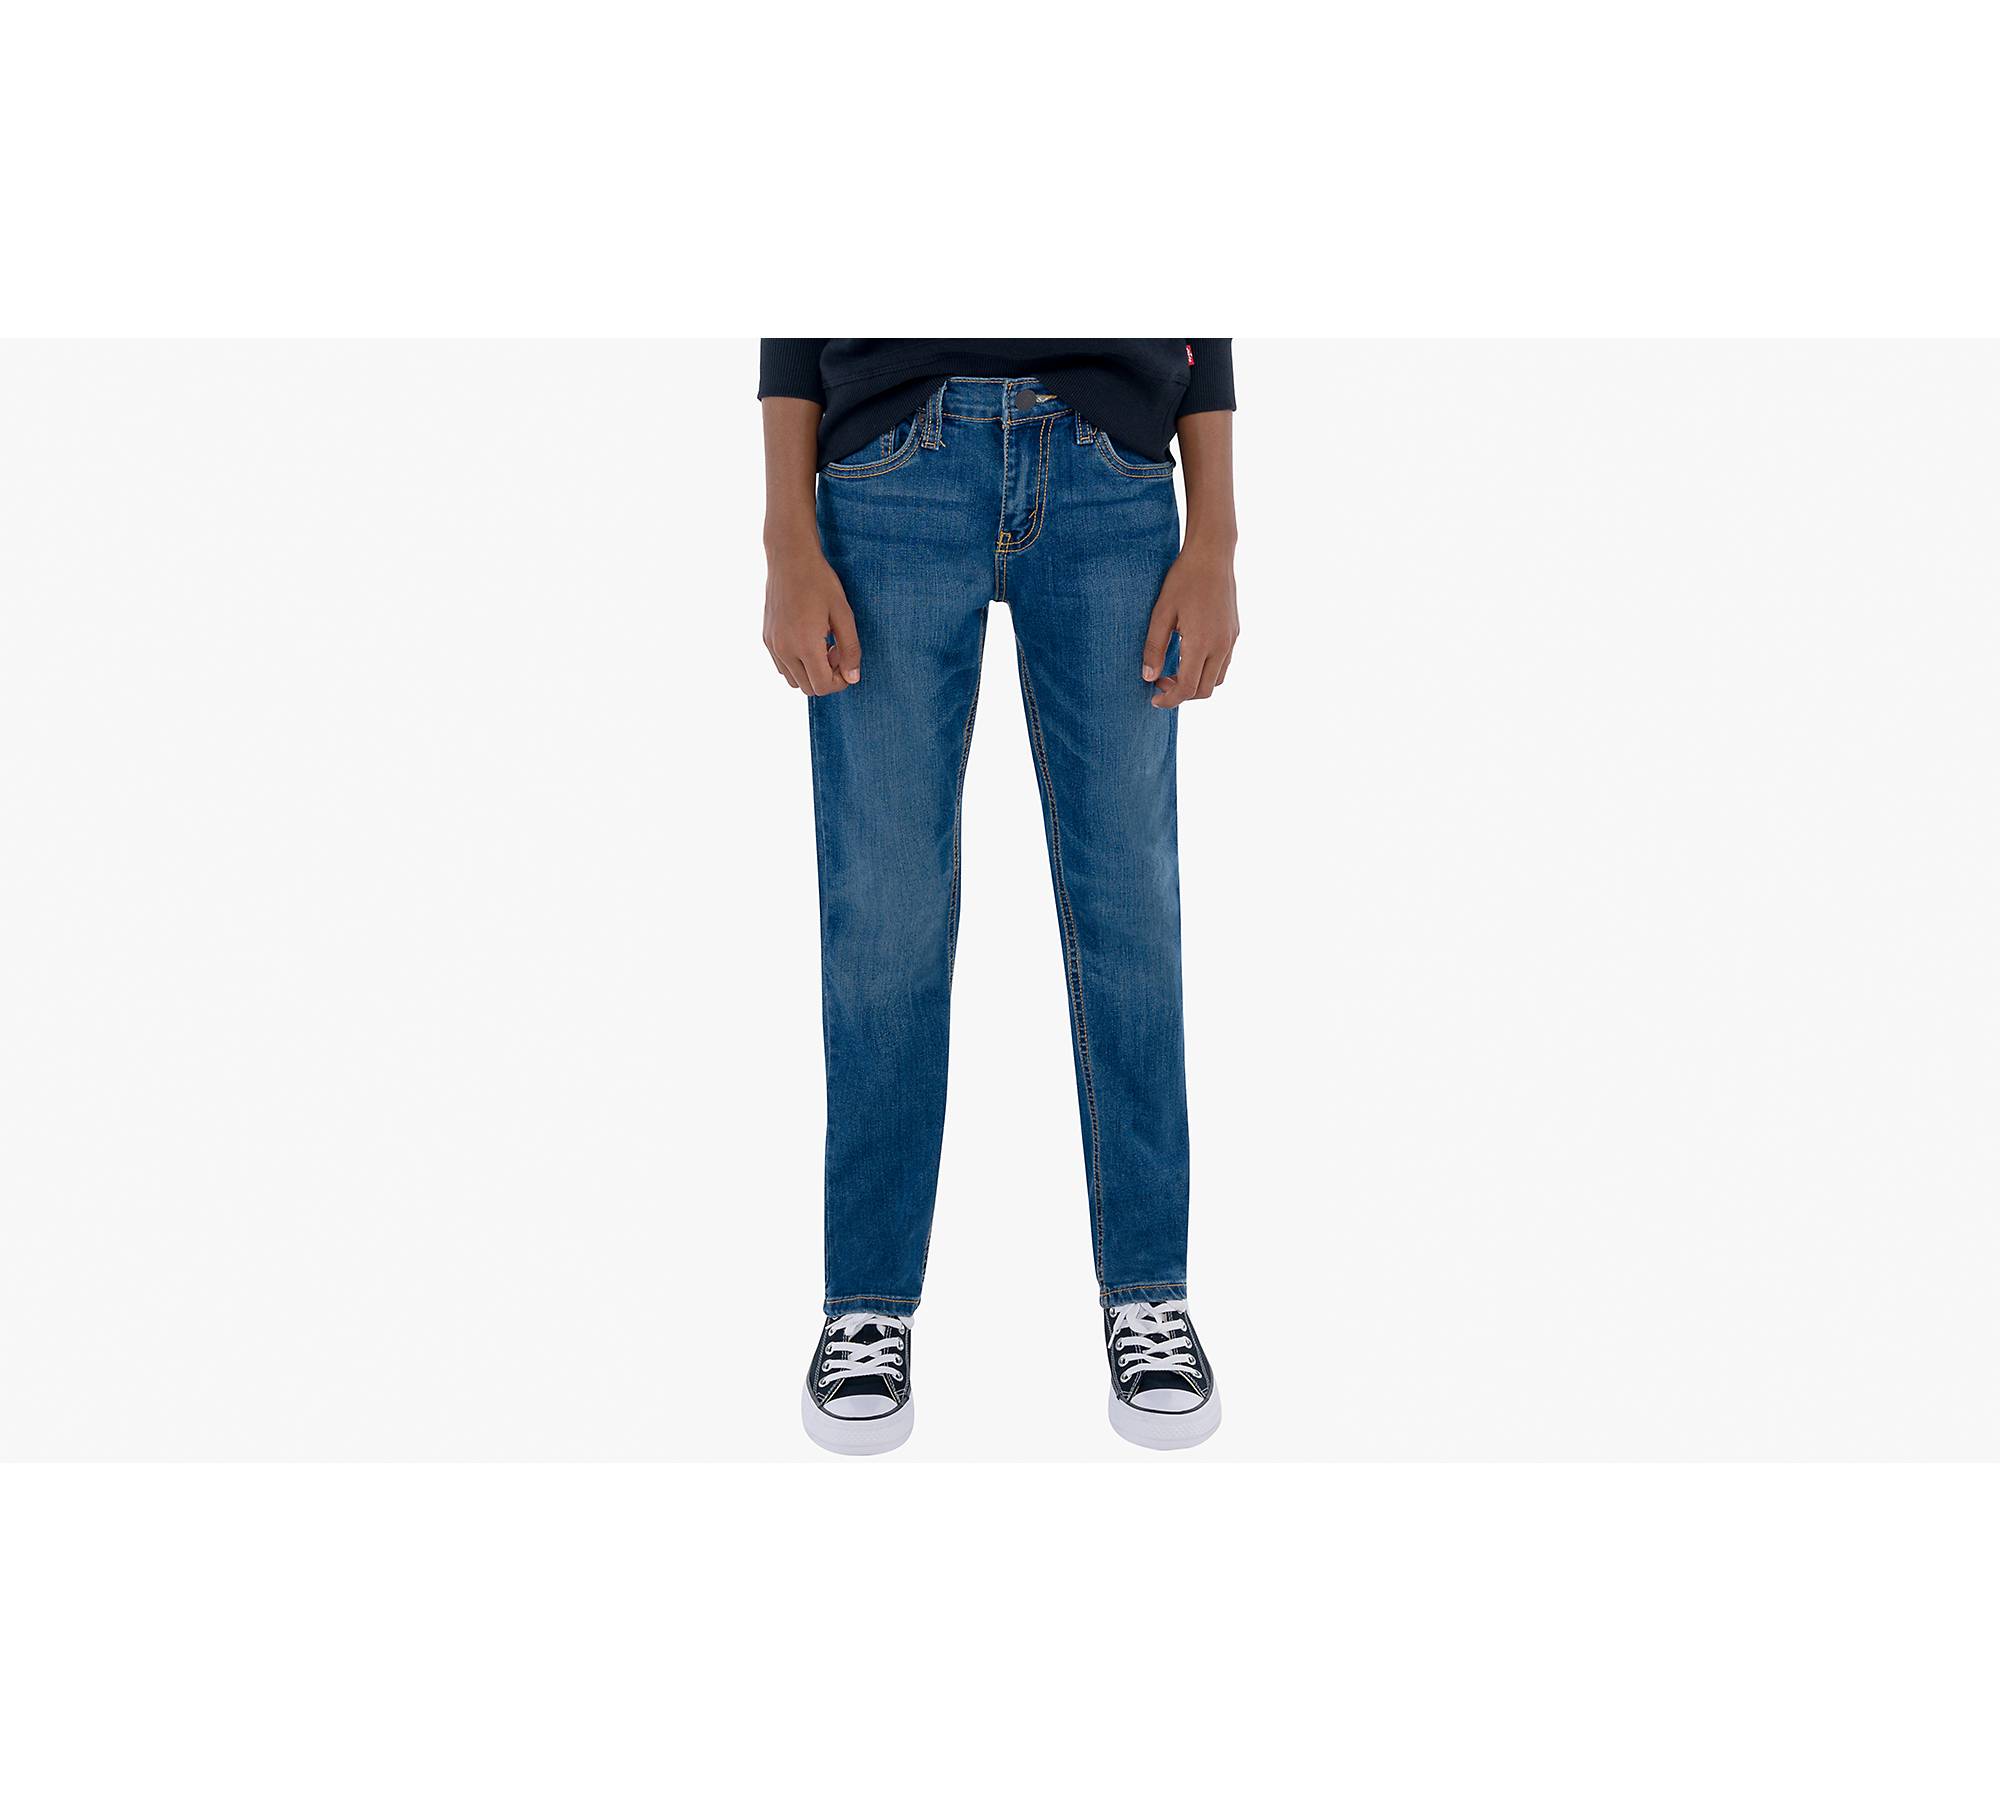 511™ Slim Fit Performance Big Boys Jeans 8-20 - Light Wash | Levi's® US